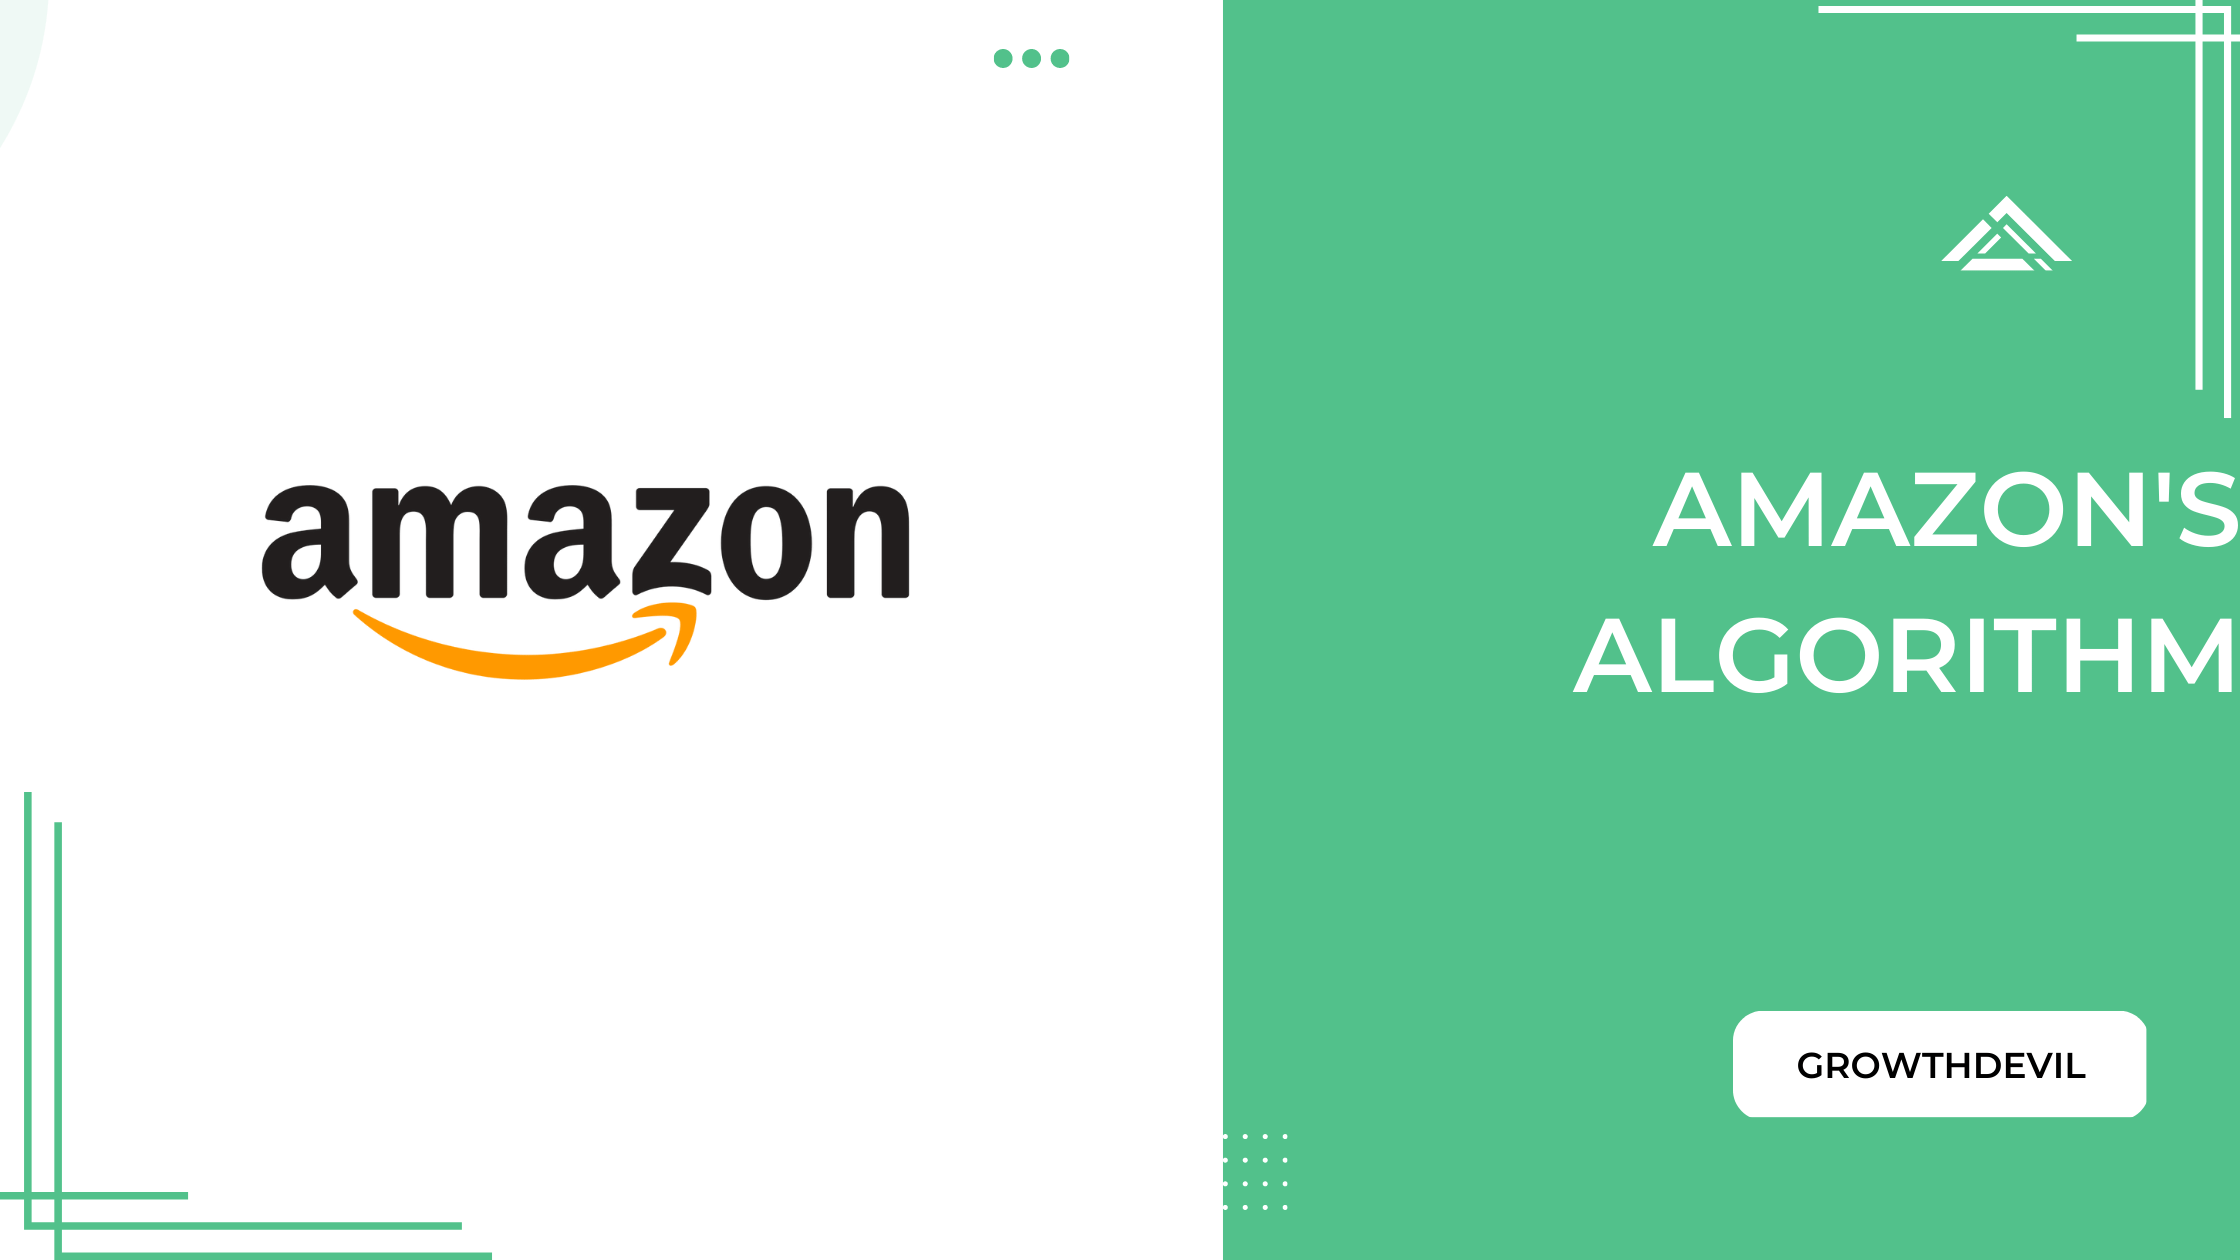 Amazon's Algorithm - GrowthDevil